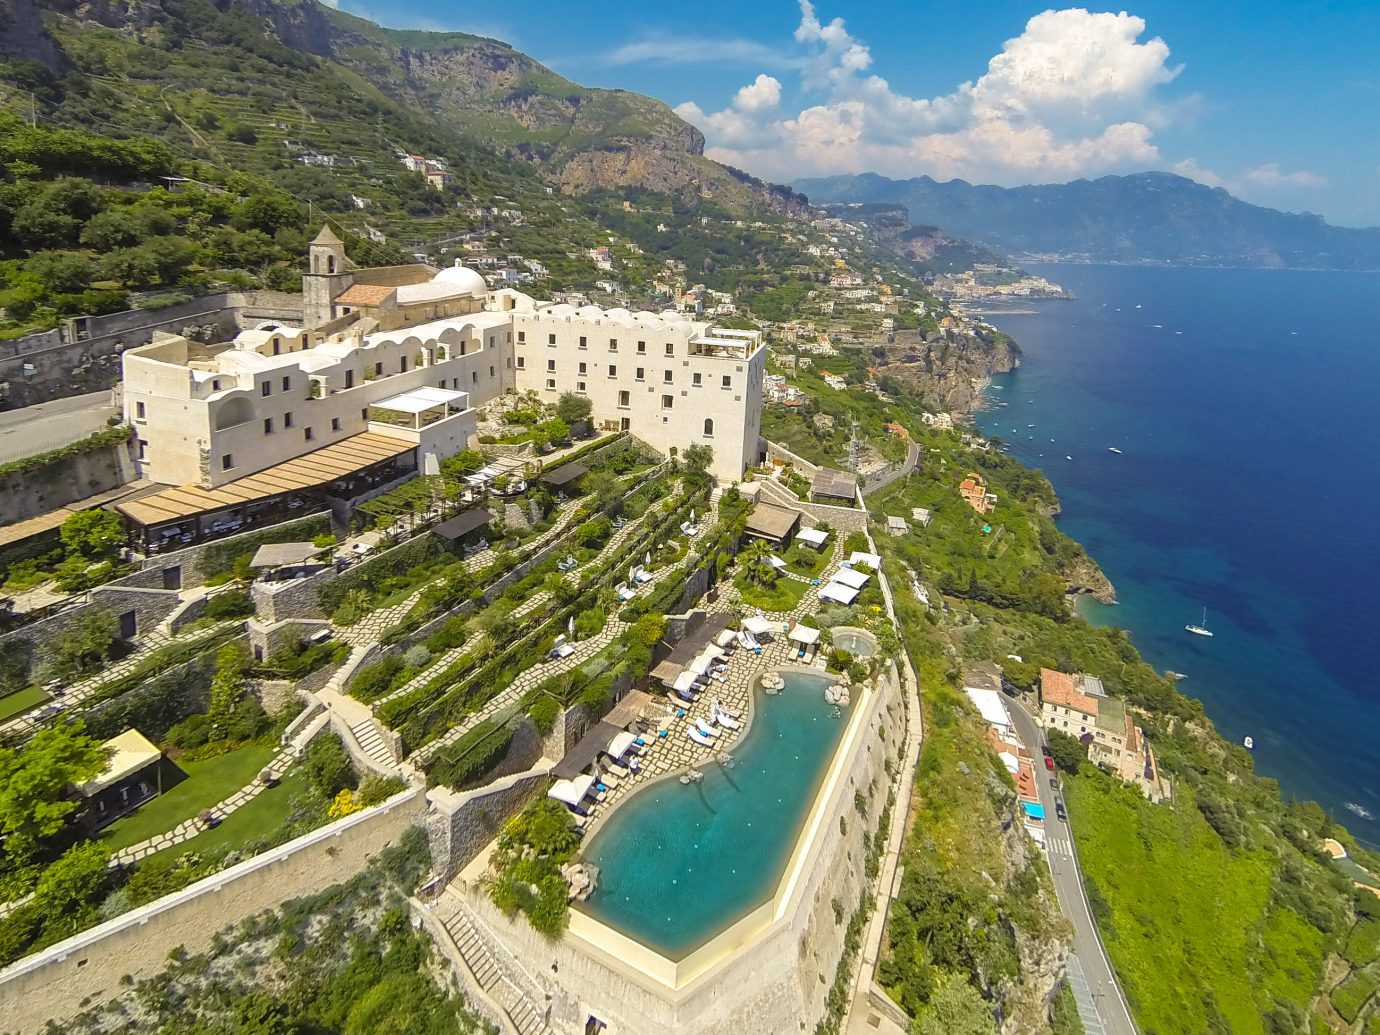 Monastero Santa Rosa Hotel, Amalfi Coast